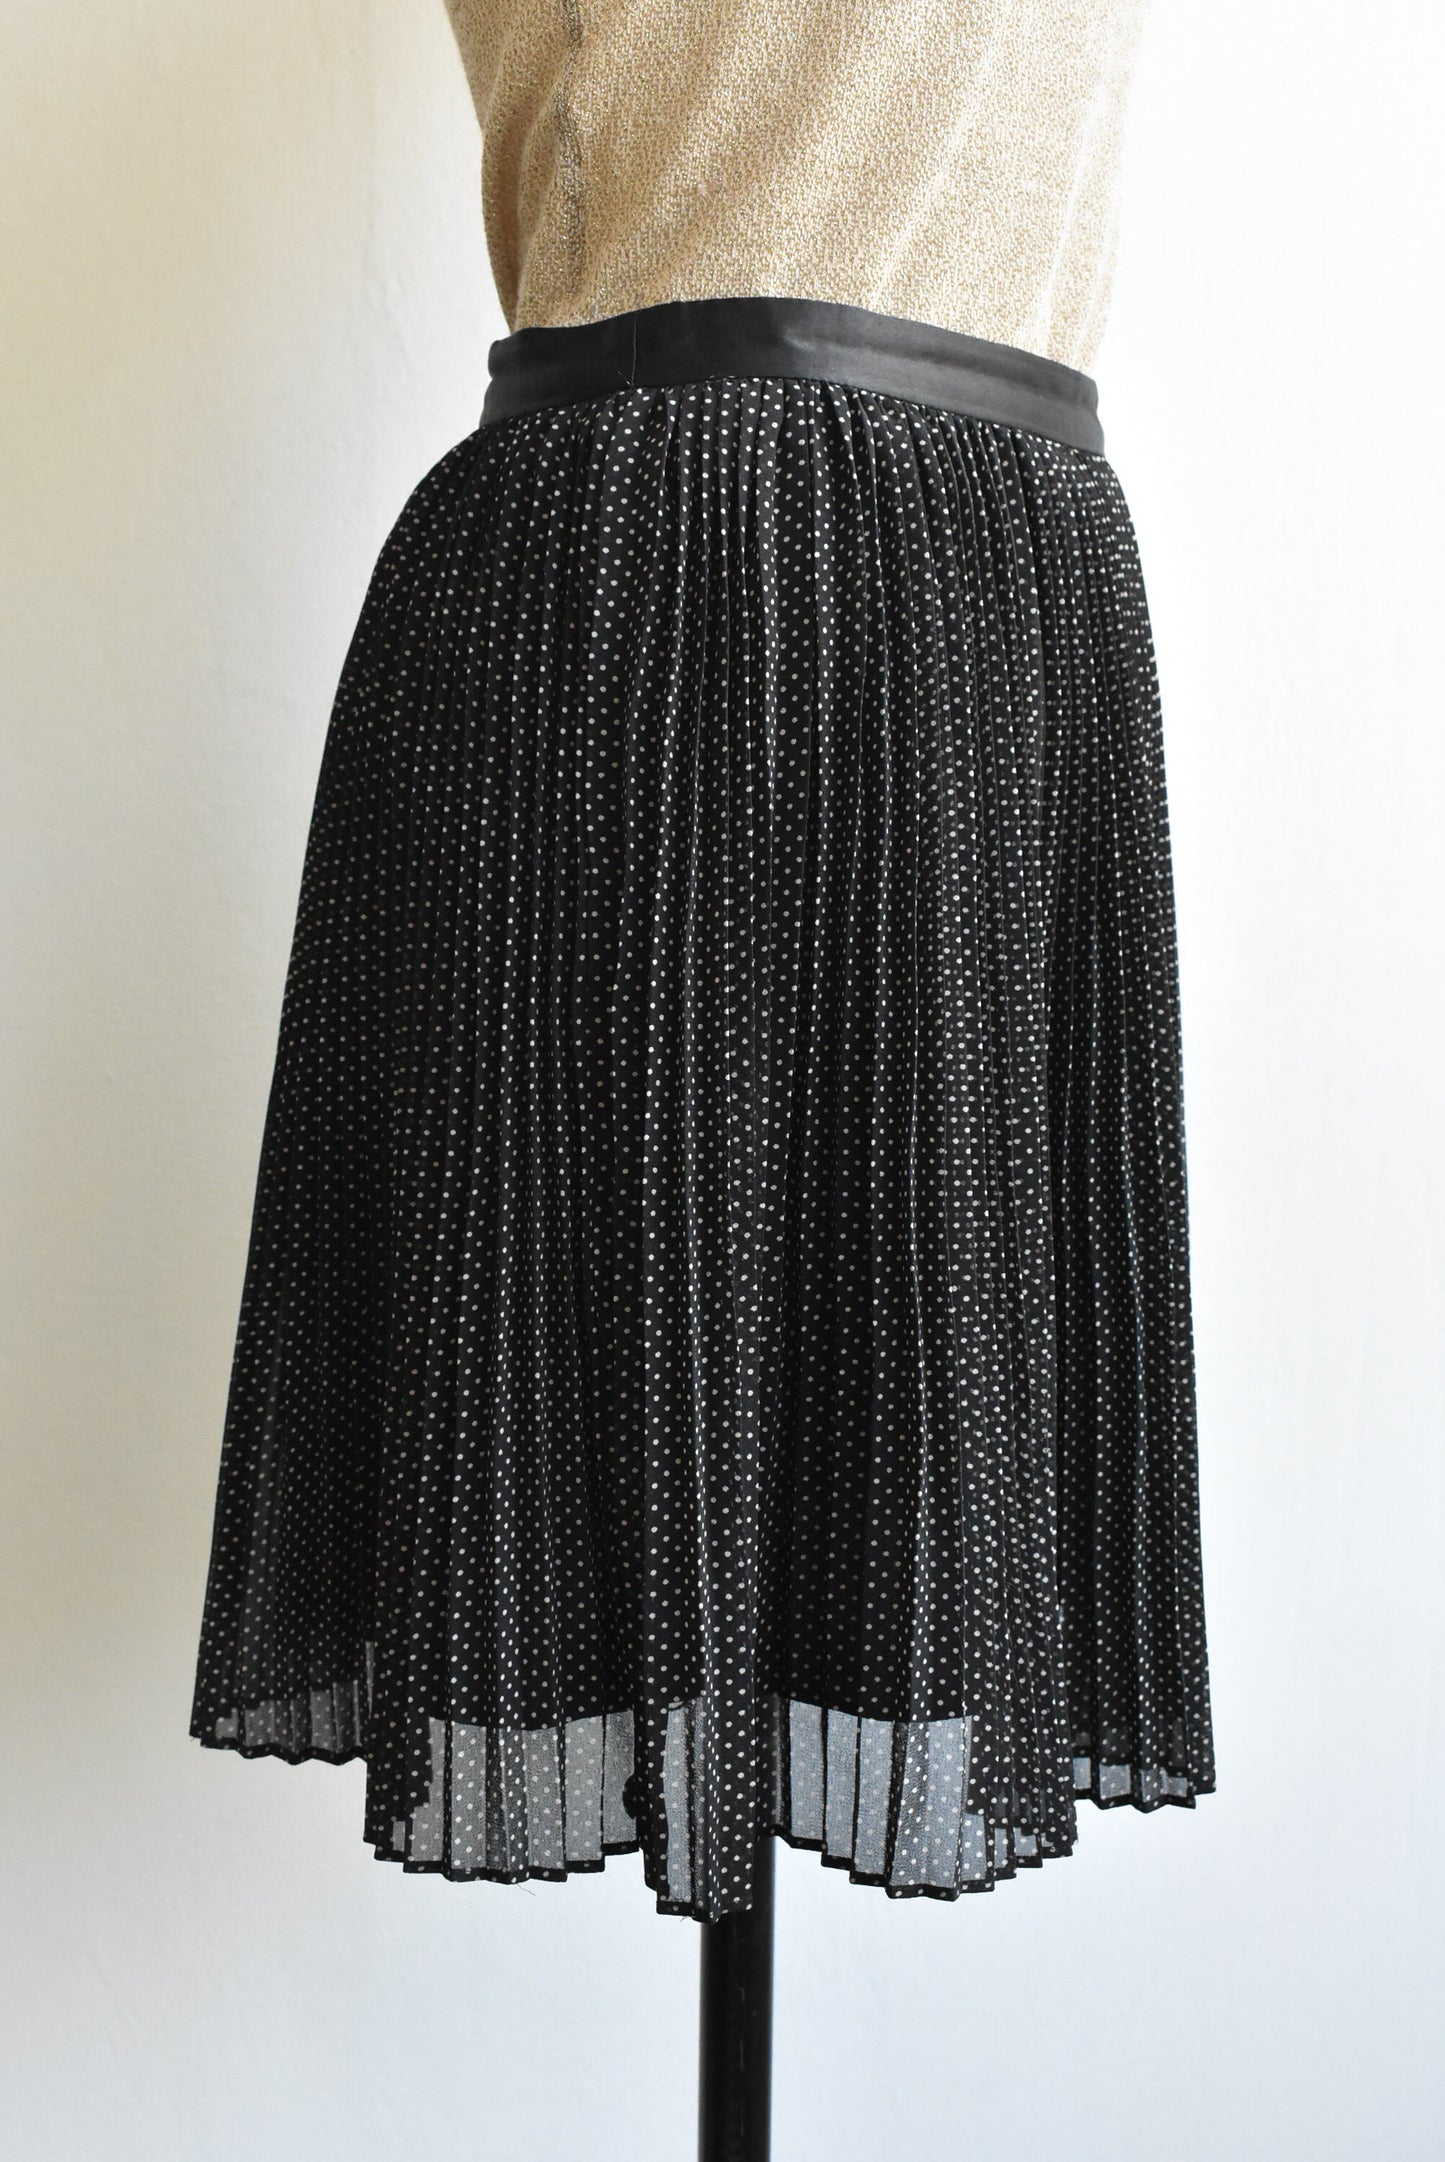 Jack Wills pleated polka dot mini-skirt, size 8